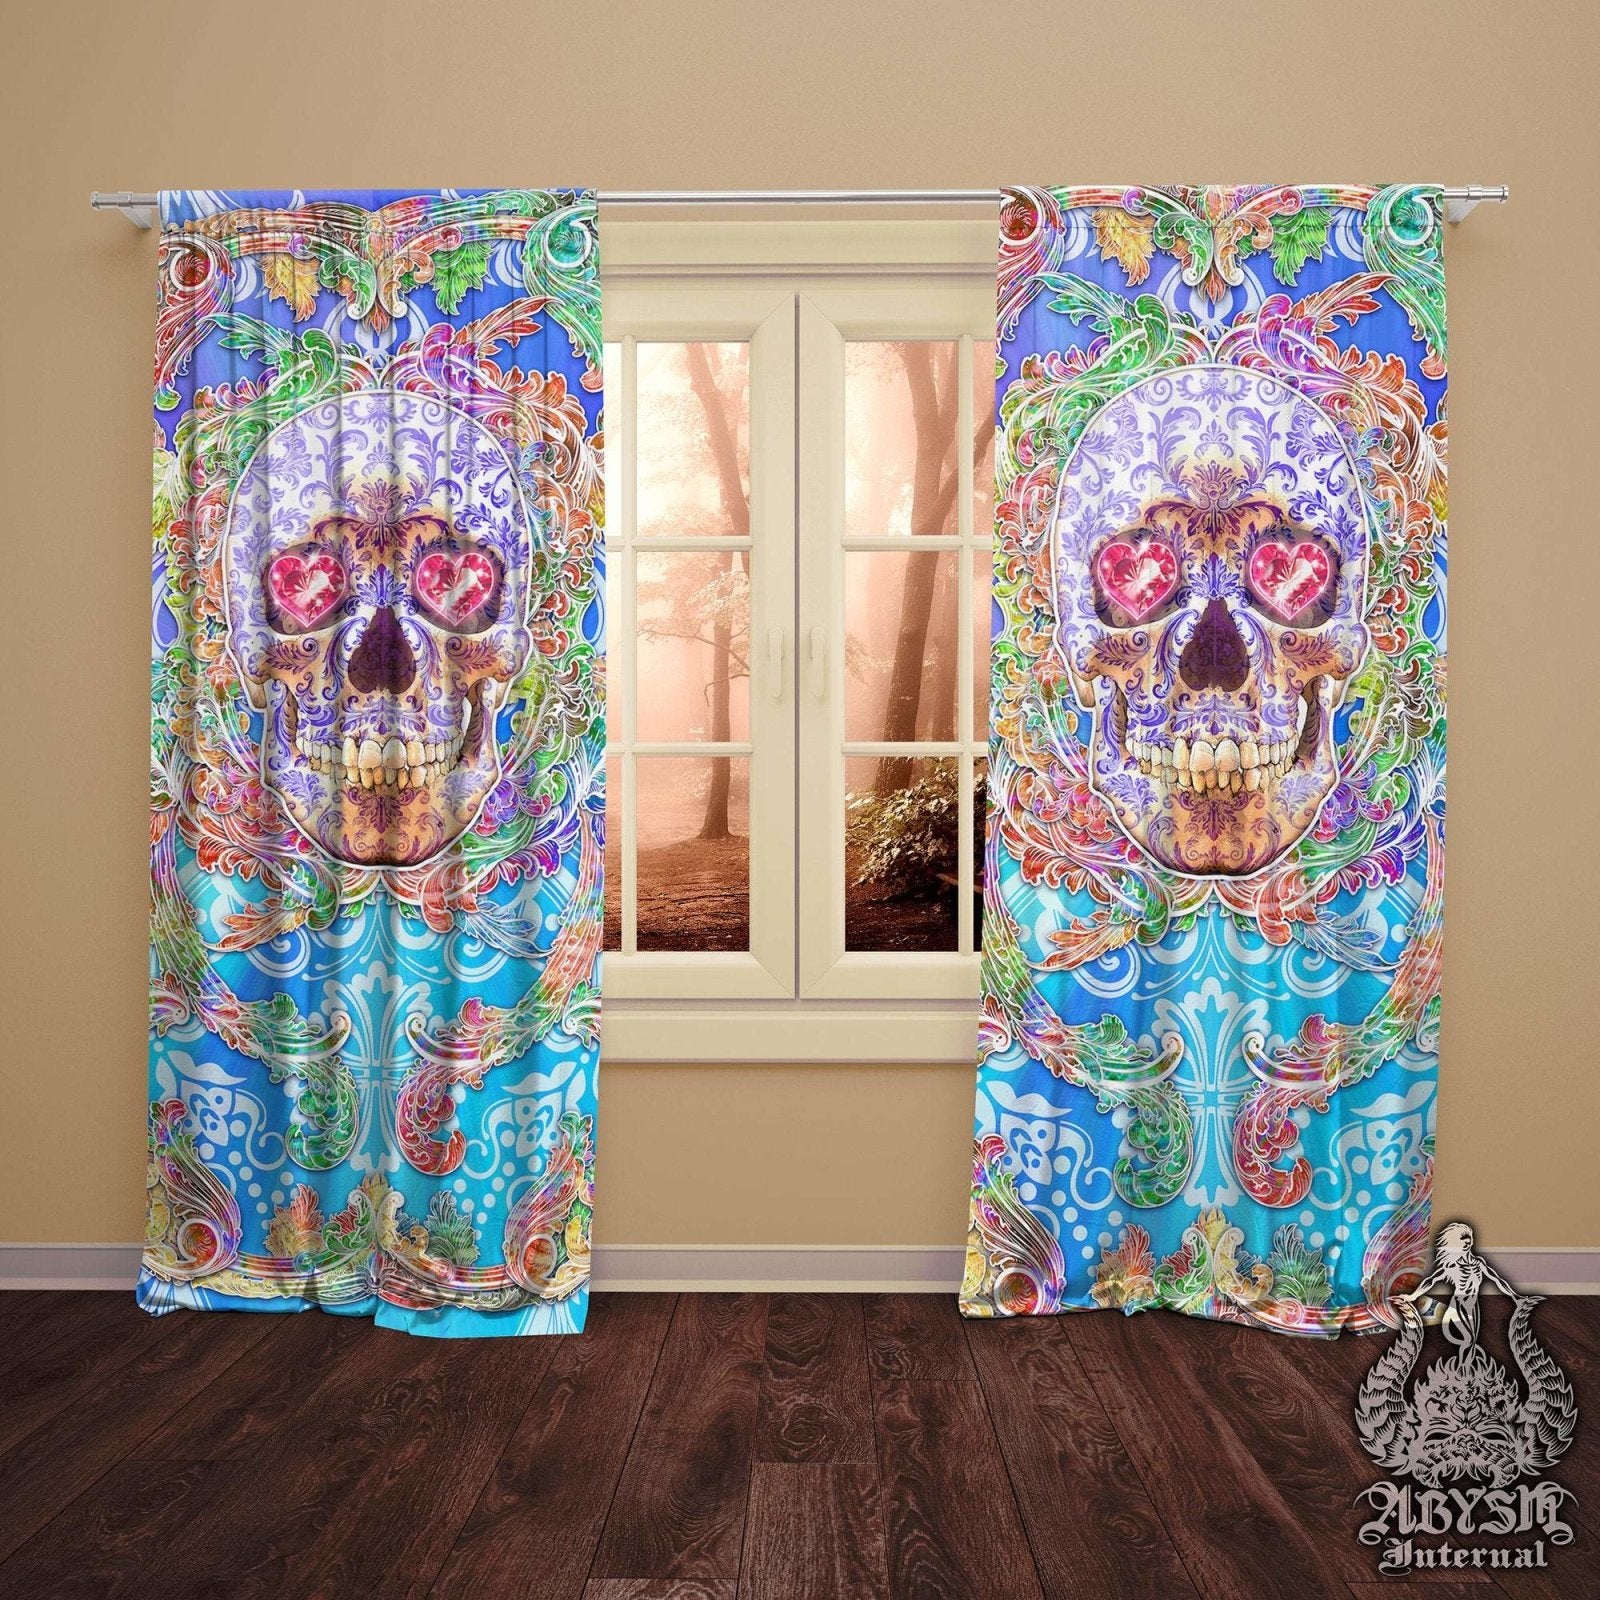 Boho Blackout Curtains, Long Window Panels, Sugar Skull Art Print, Festive Summer Decor - Psy Purple with Rubies - Abysm Internal